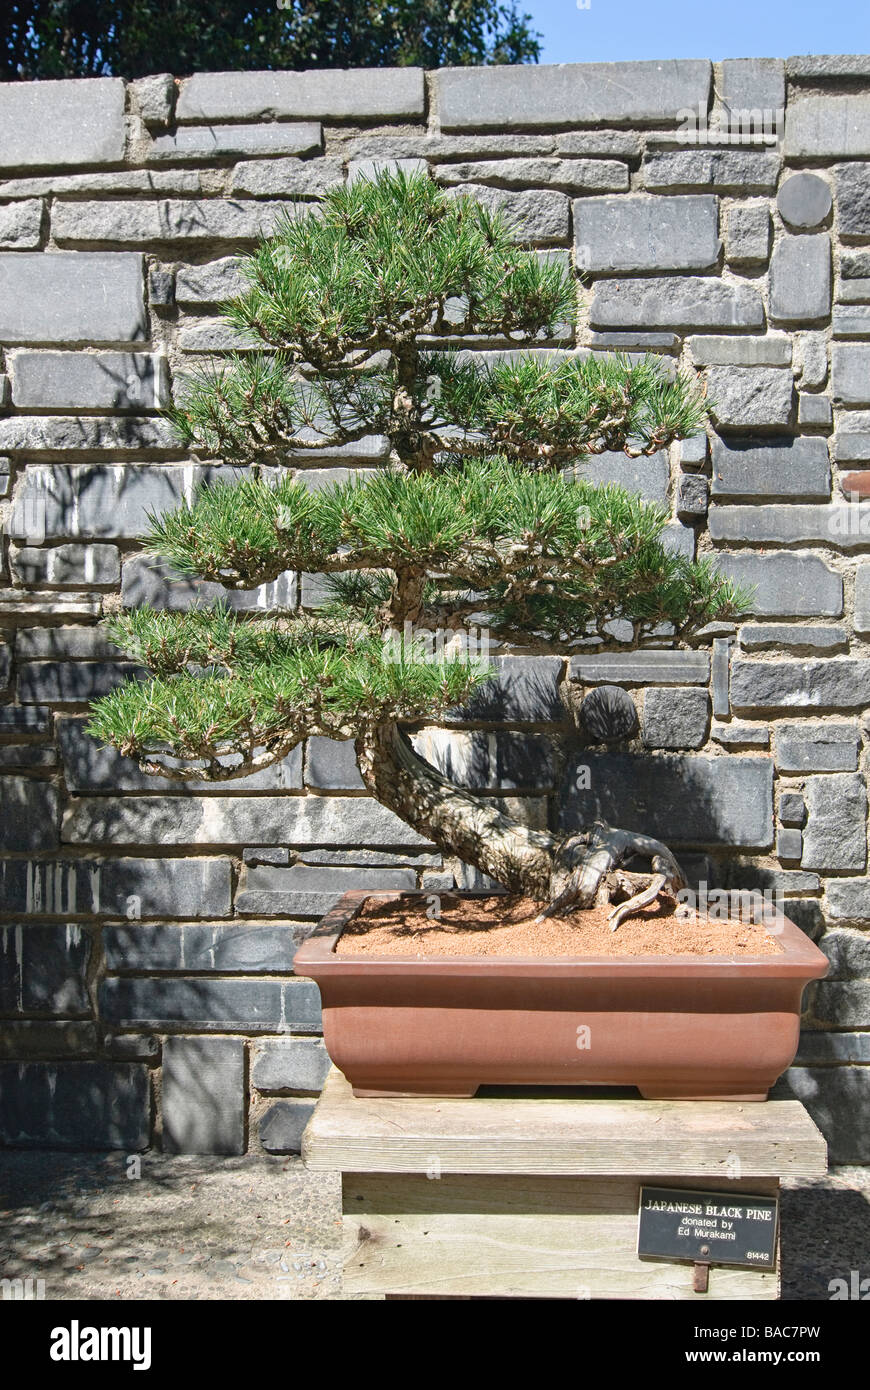 Bonsai Tree, Japanese Black Pine Stock Photo